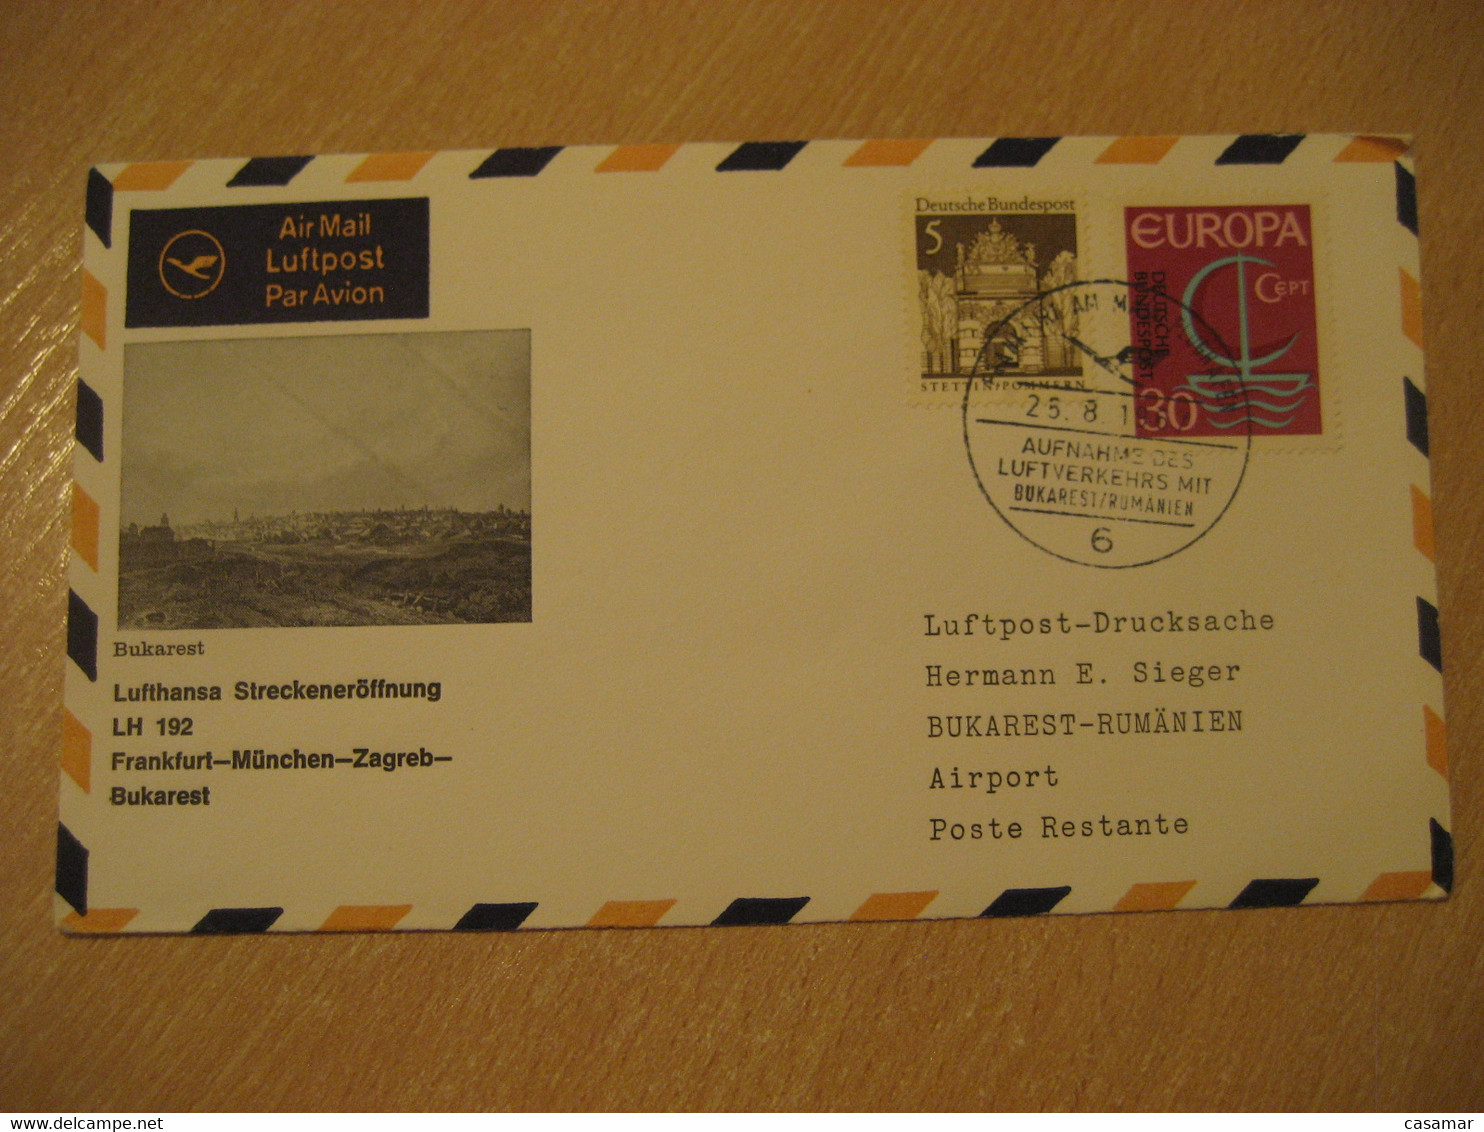 BUCHAREST Zagreb Munich Frankfurt 1967 Lufthansa Airlines First Flight Cancel Cover ROMANIA YUGOSLAVIA CROATIA GERMANY - Lettres & Documents